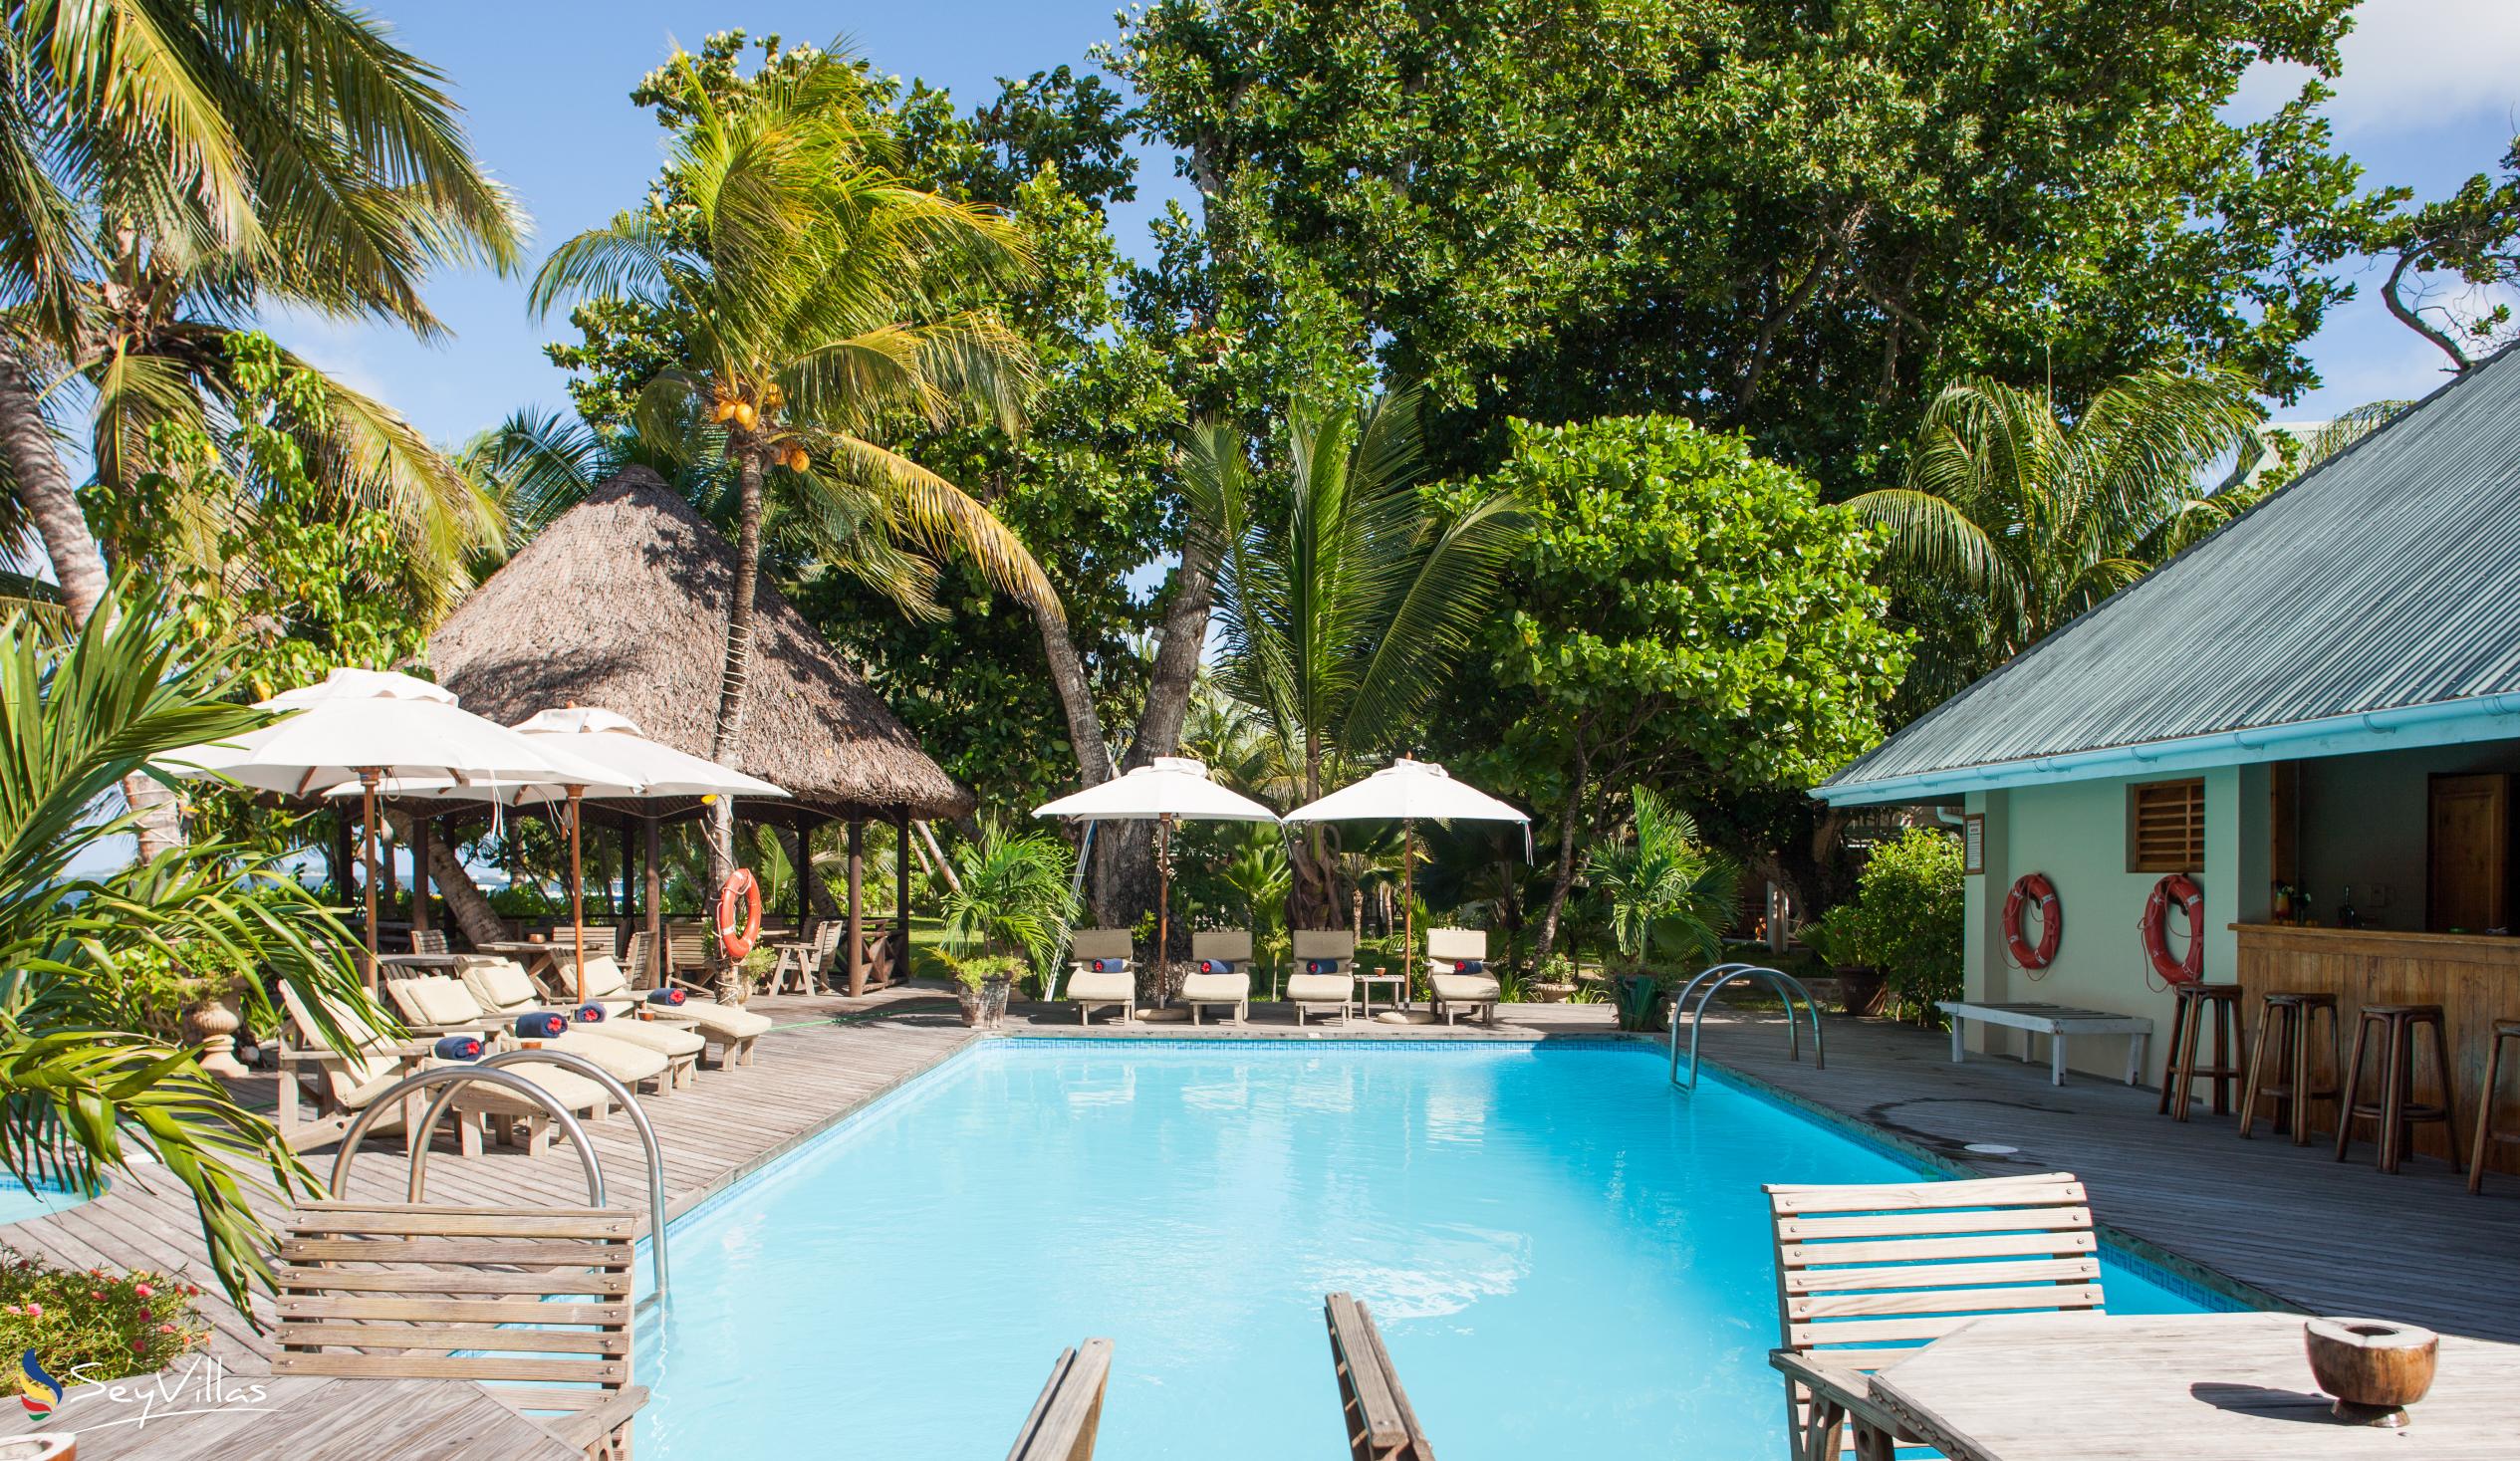 Photo 8: Indian Ocean Lodge - Outdoor area - Praslin (Seychelles)